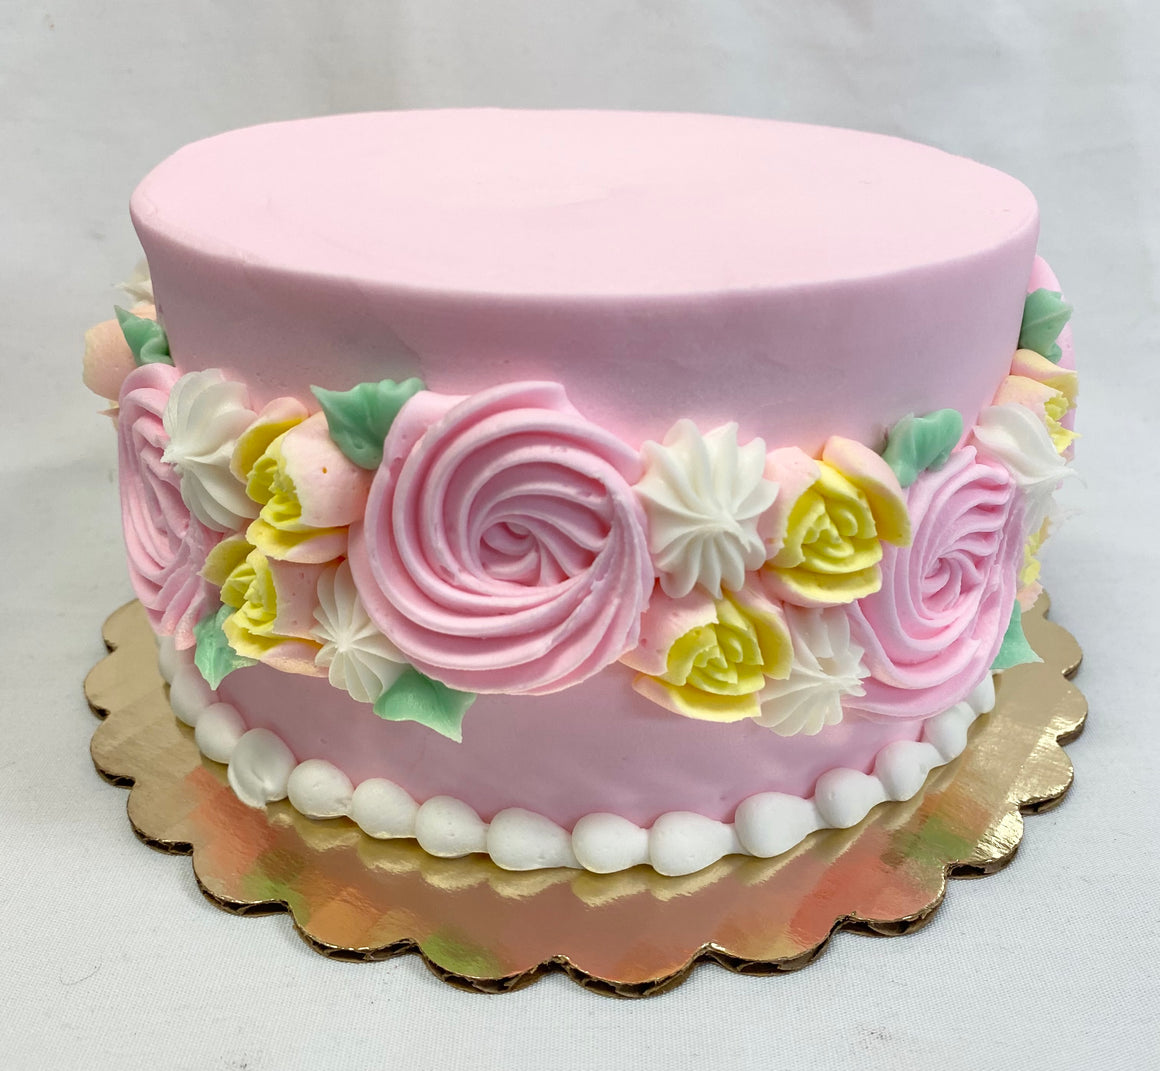 'Pretty in Pink' Design Cake